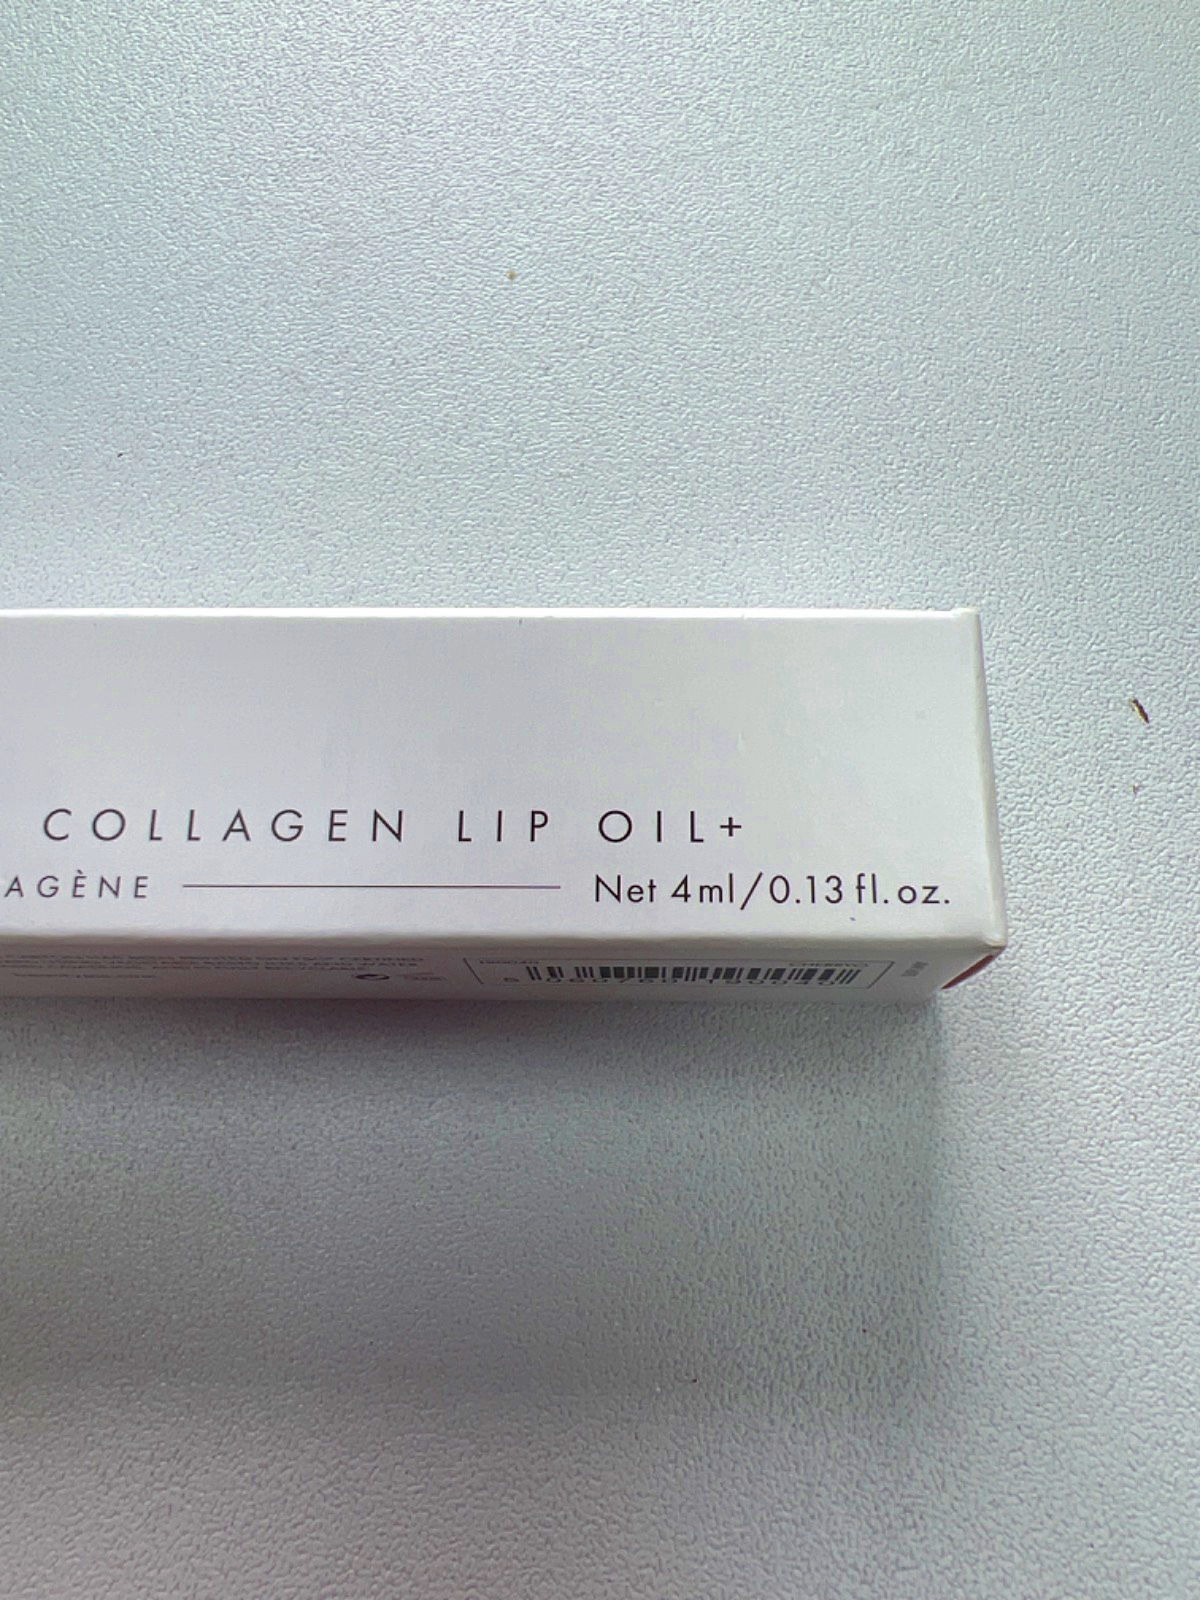 Beauty Pie Wondergloss Collagen Lip Oil+ Cherry 4ml